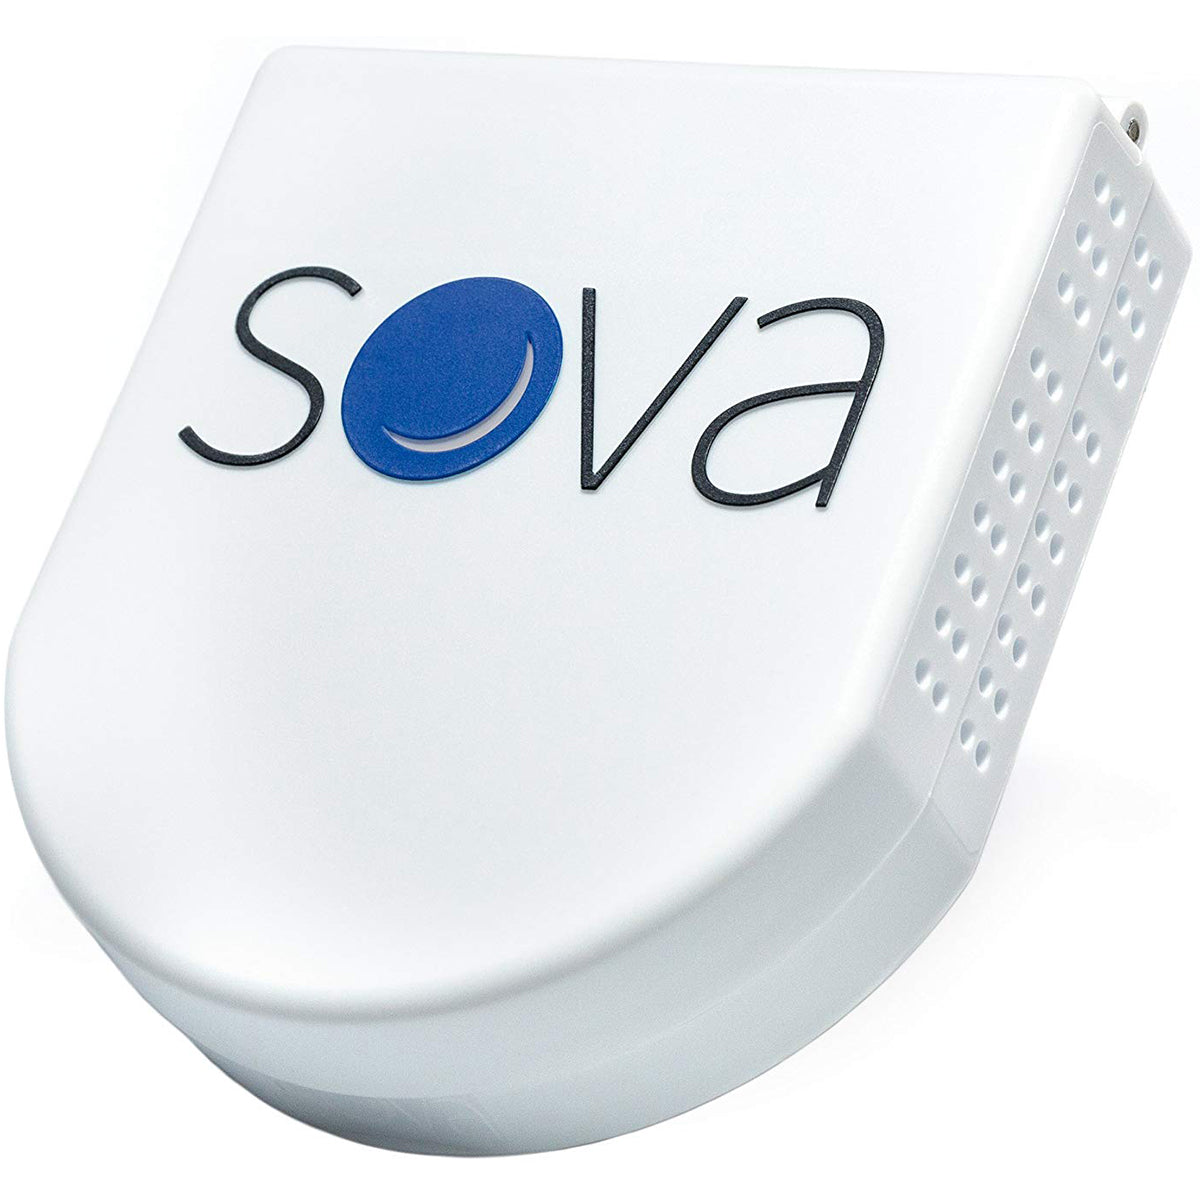 SOVA Aero Night Guard Mouthguard with Case SOVA